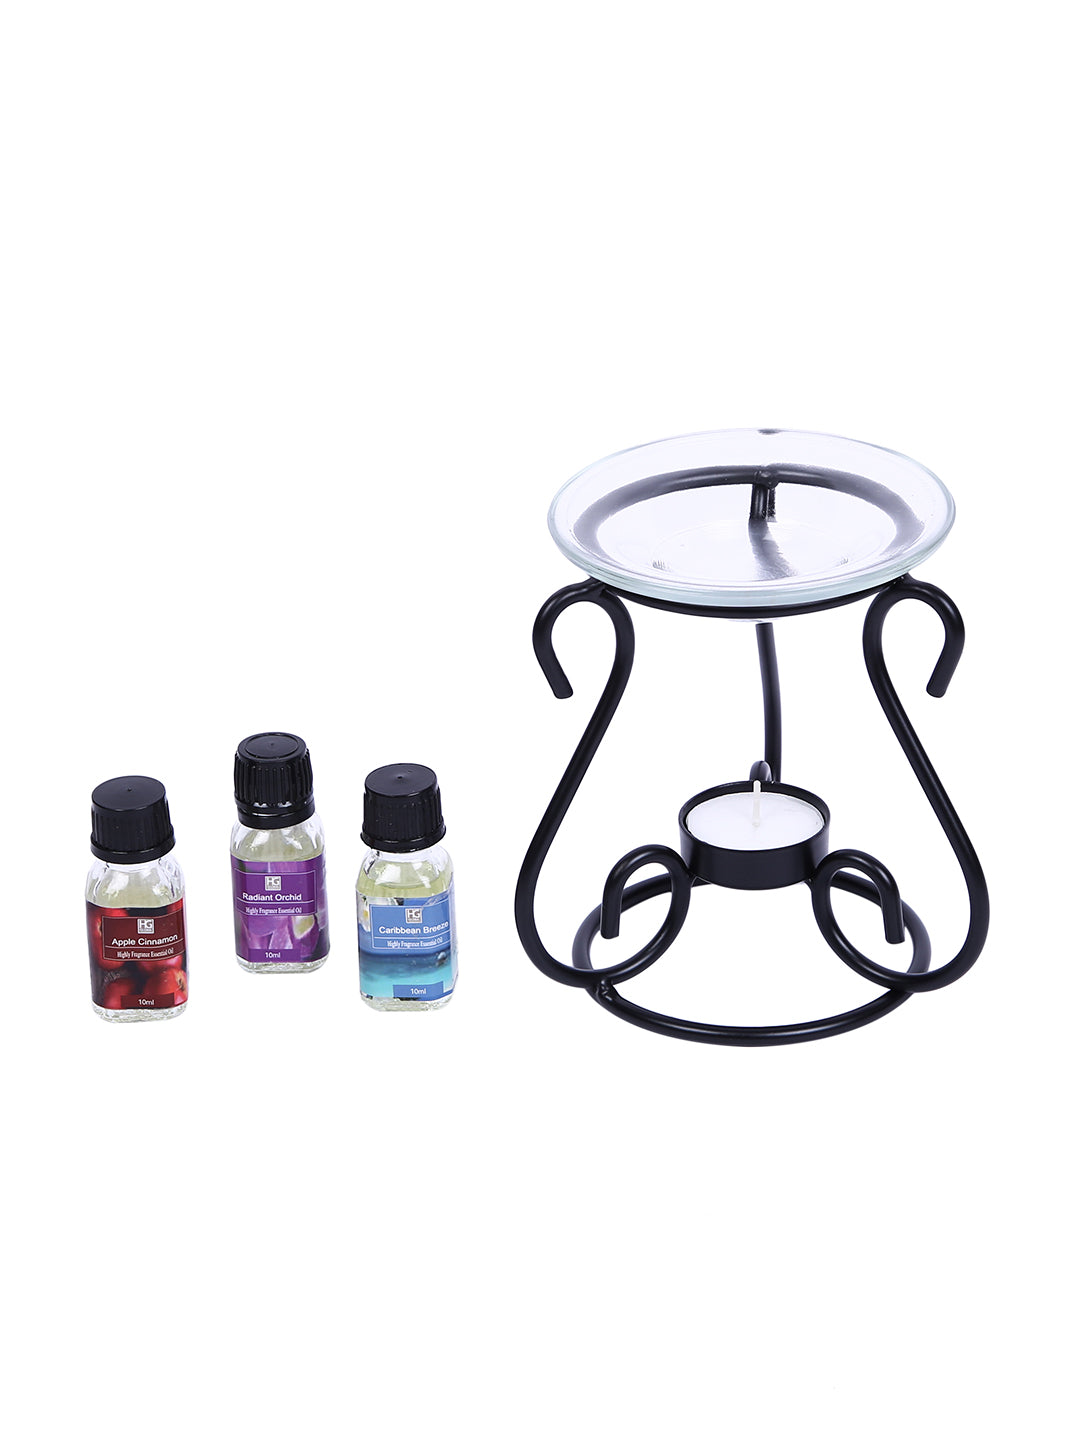 Hosley® Oil Warmer Gift set, Includes 3 Bottles of Assorted Fragrance Oils and 3 bonus tealights